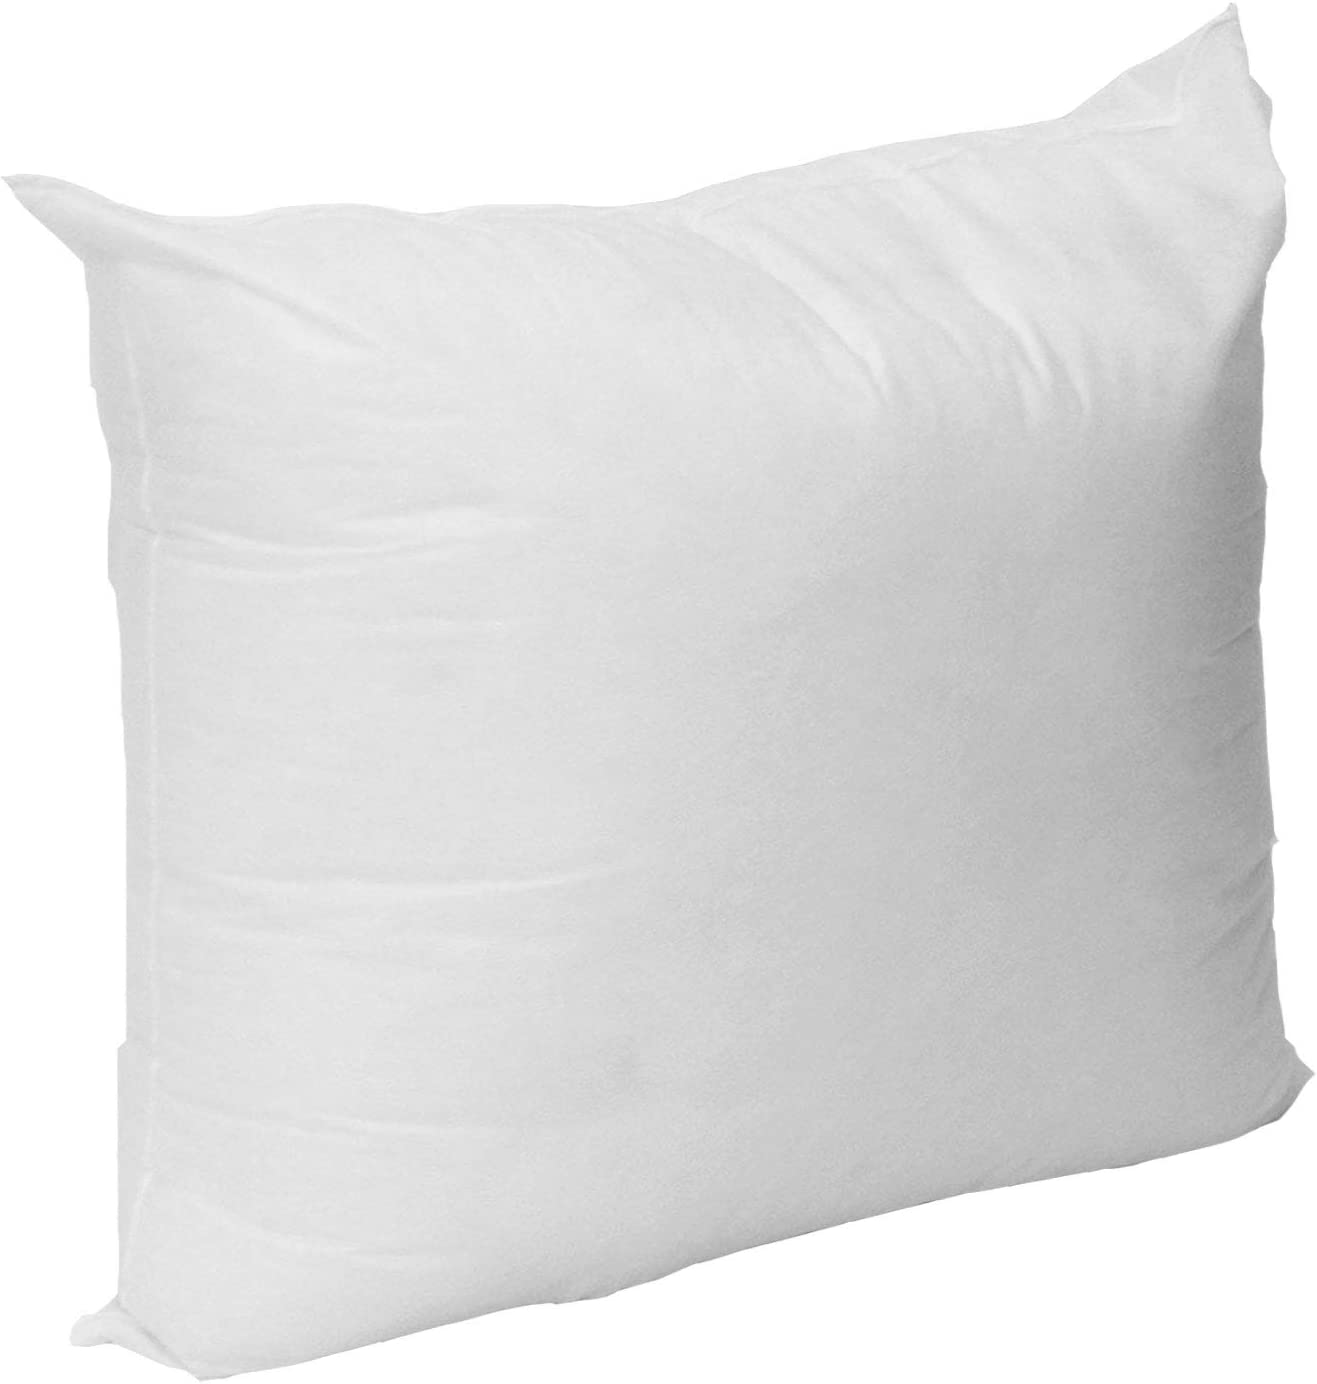 Mybecca Pillow Sham Stuffer Hypoallergenic Square Insert, 26" x 26"